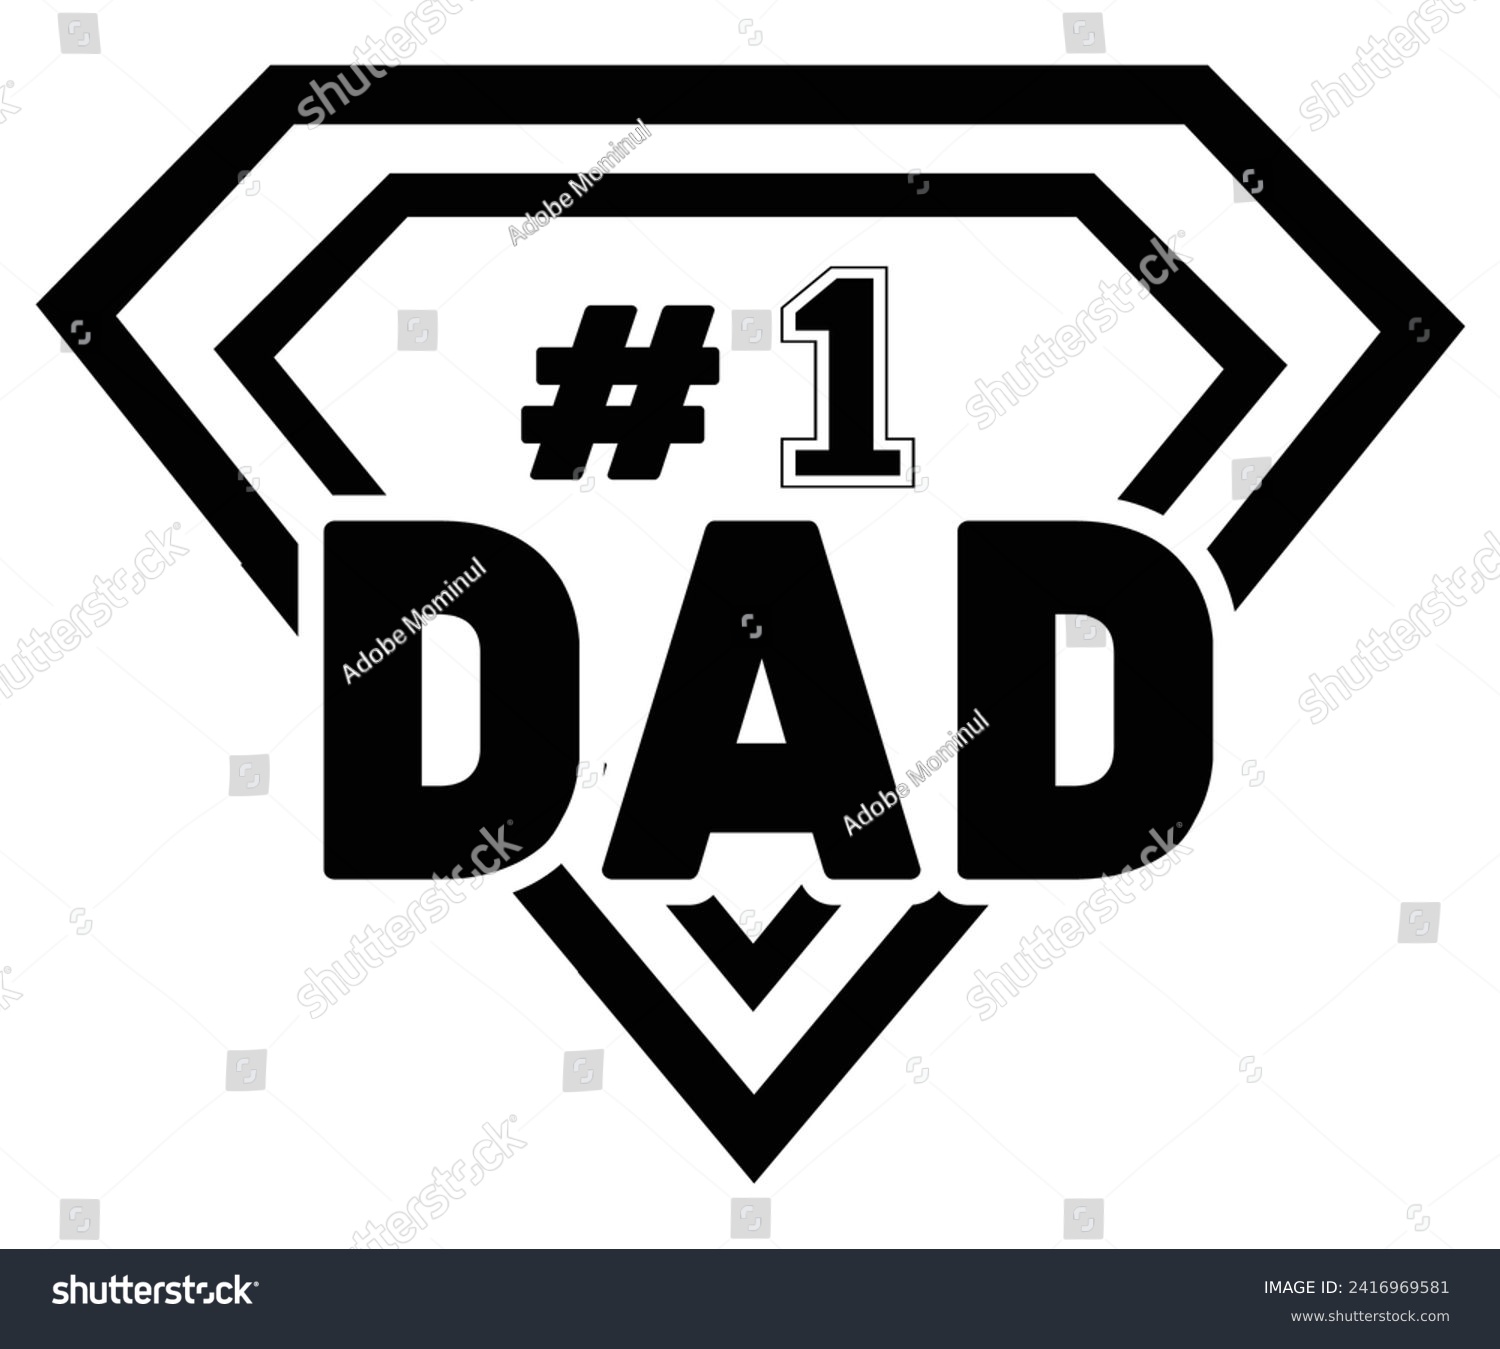 SVG of # 1 Dad Svg,Father's Day Svg,Papa svg,Grandpa Svg,Father's Day Saying Qoutes,Dad Svg,Funny Father, Gift For Dad Svg,Daddy Svg,Family Svg,T shirt Design,Svg Cut File,Typography svg